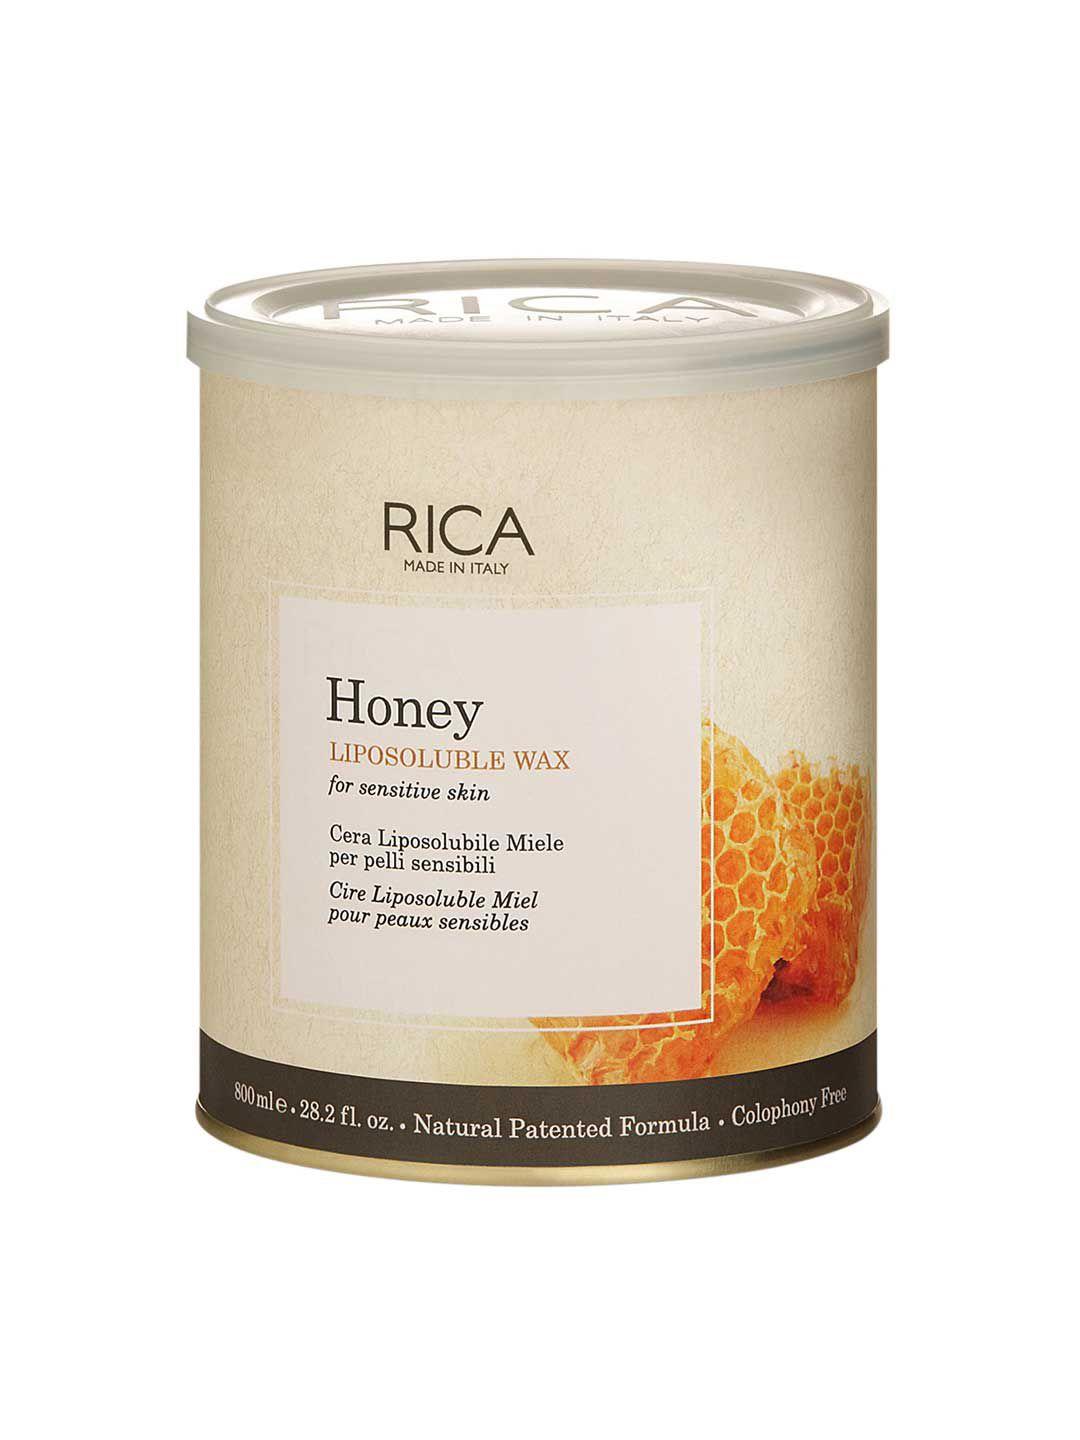 RICA Unisex Honey Liposoluble Wax